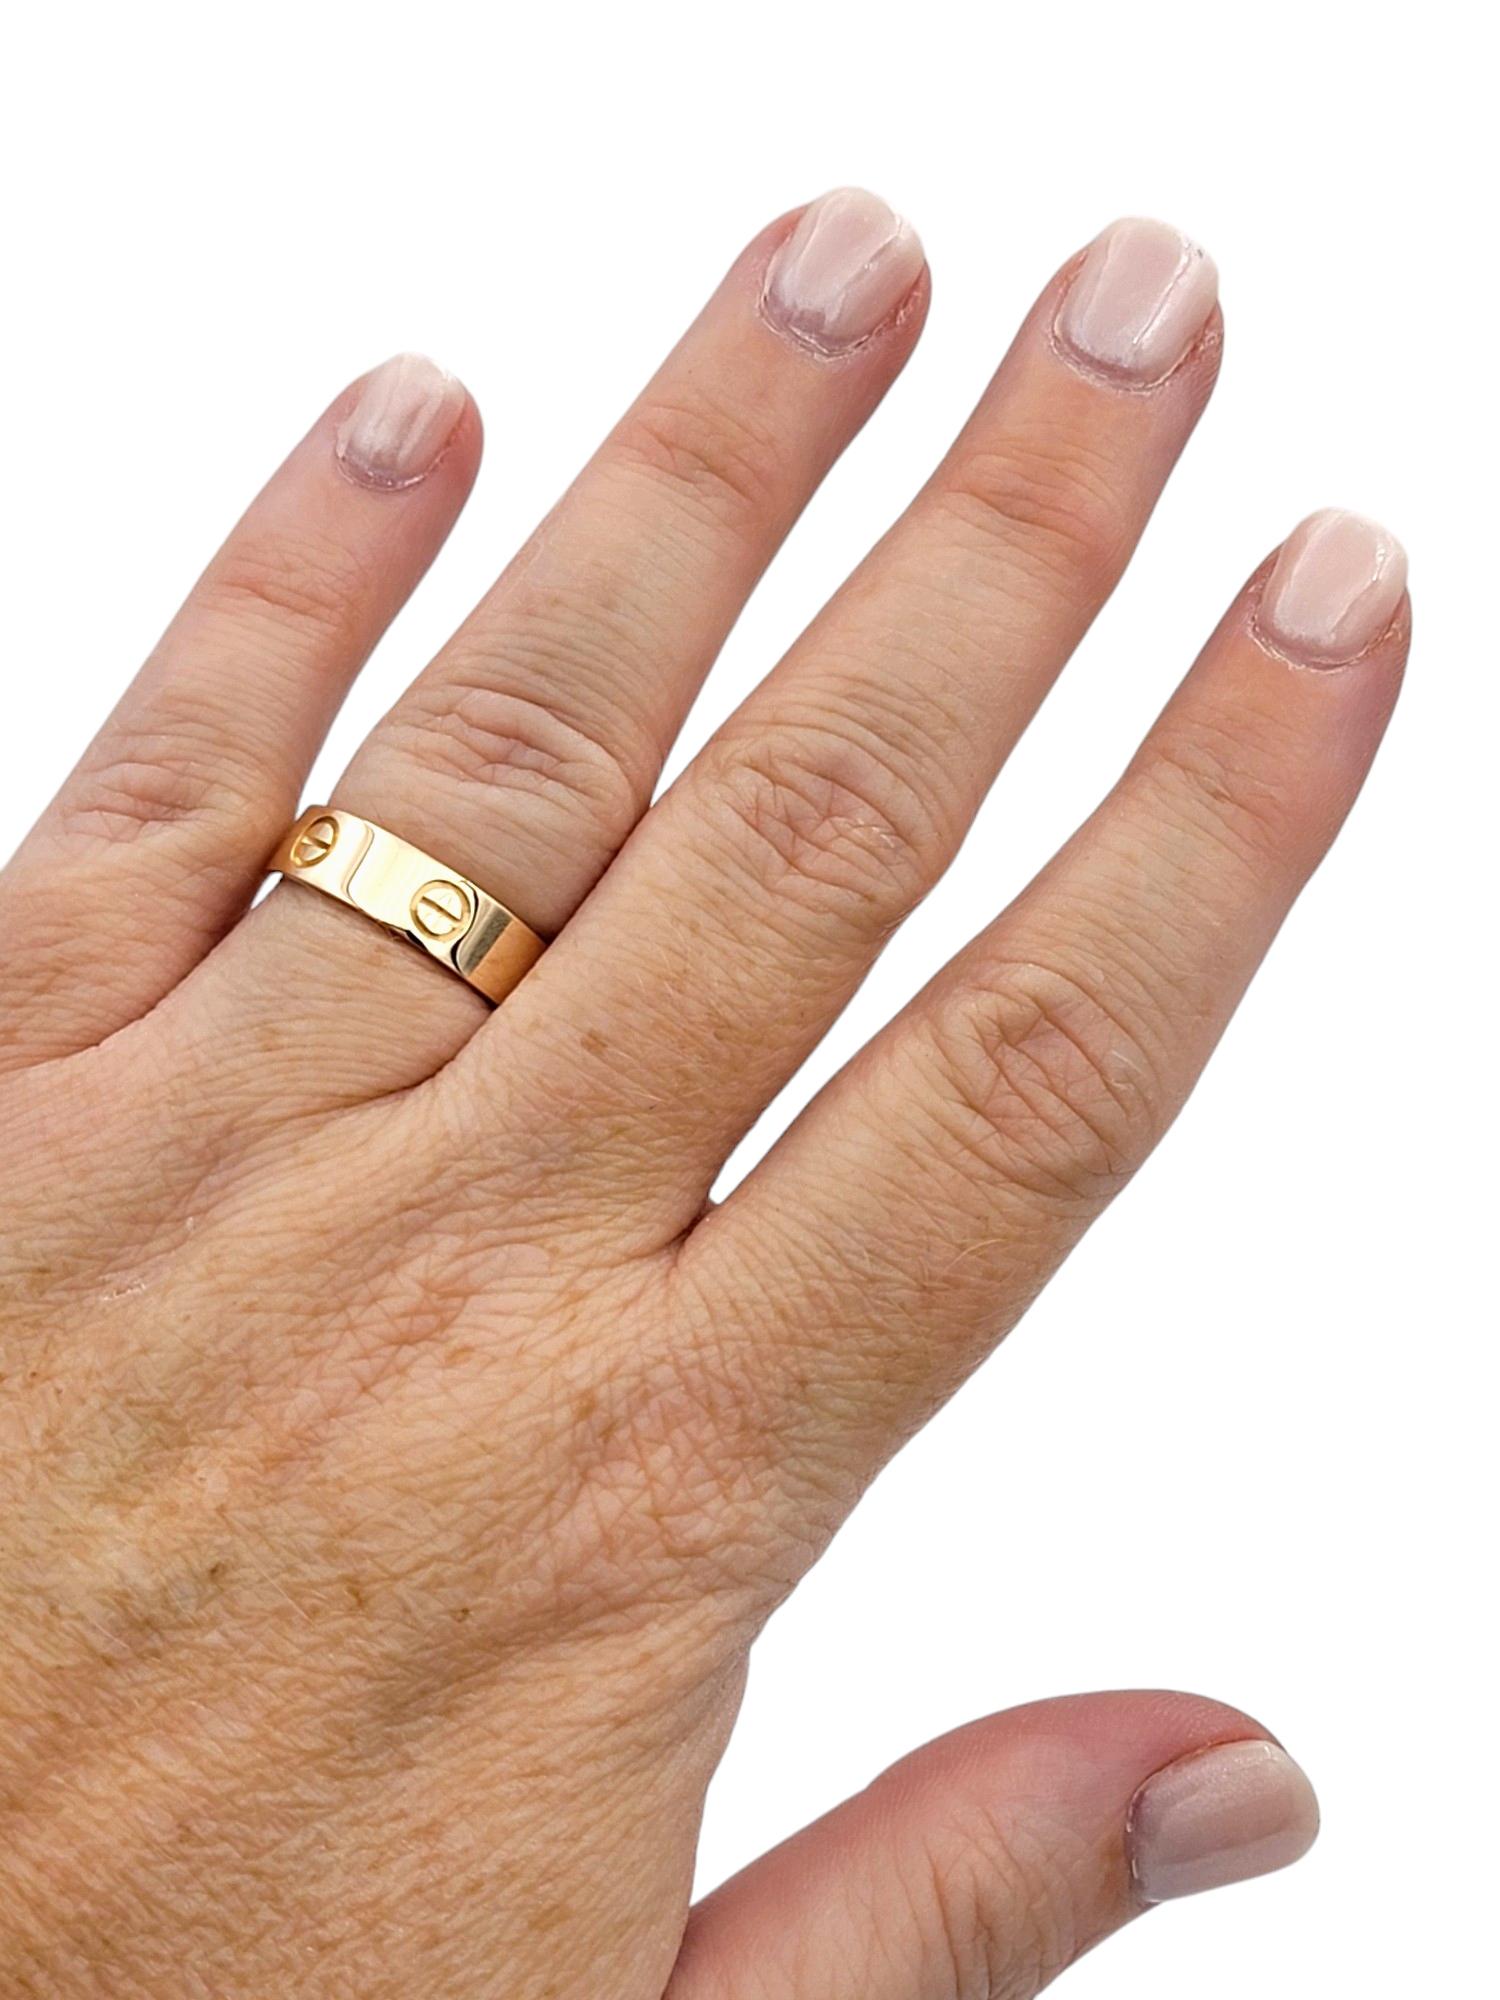 Cartier Love Collection Wedding Band Ring Set in Polished 18 Karat Rose Gold  For Sale 1